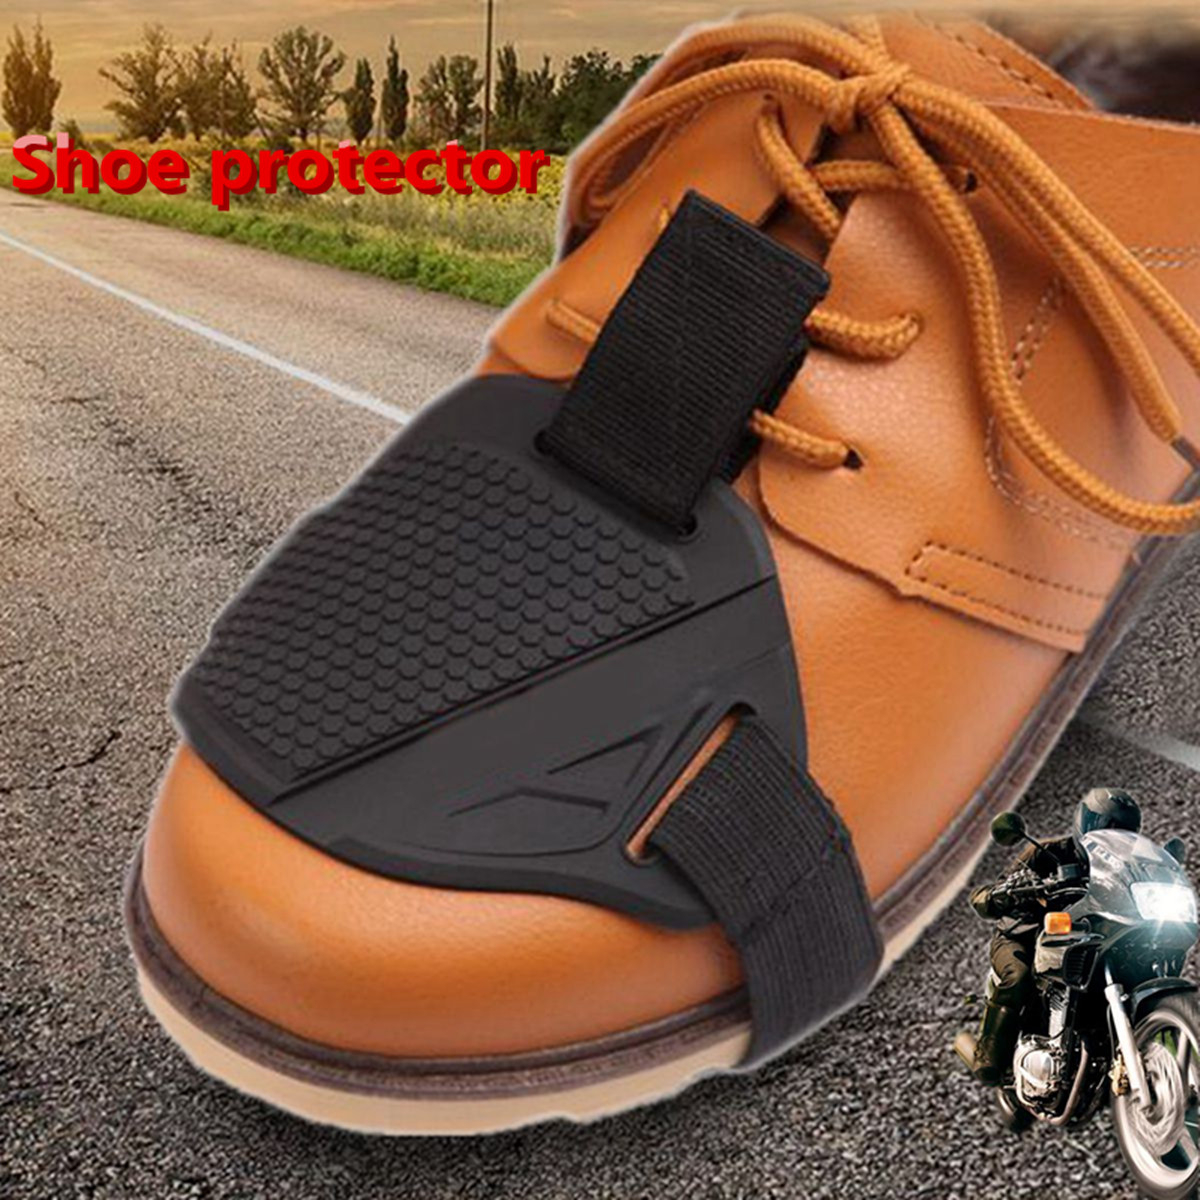 Black-Motorcycle-Shifter-Sock-Cover-Boot-Shoe-Protecter-Shift-Guard-1404100